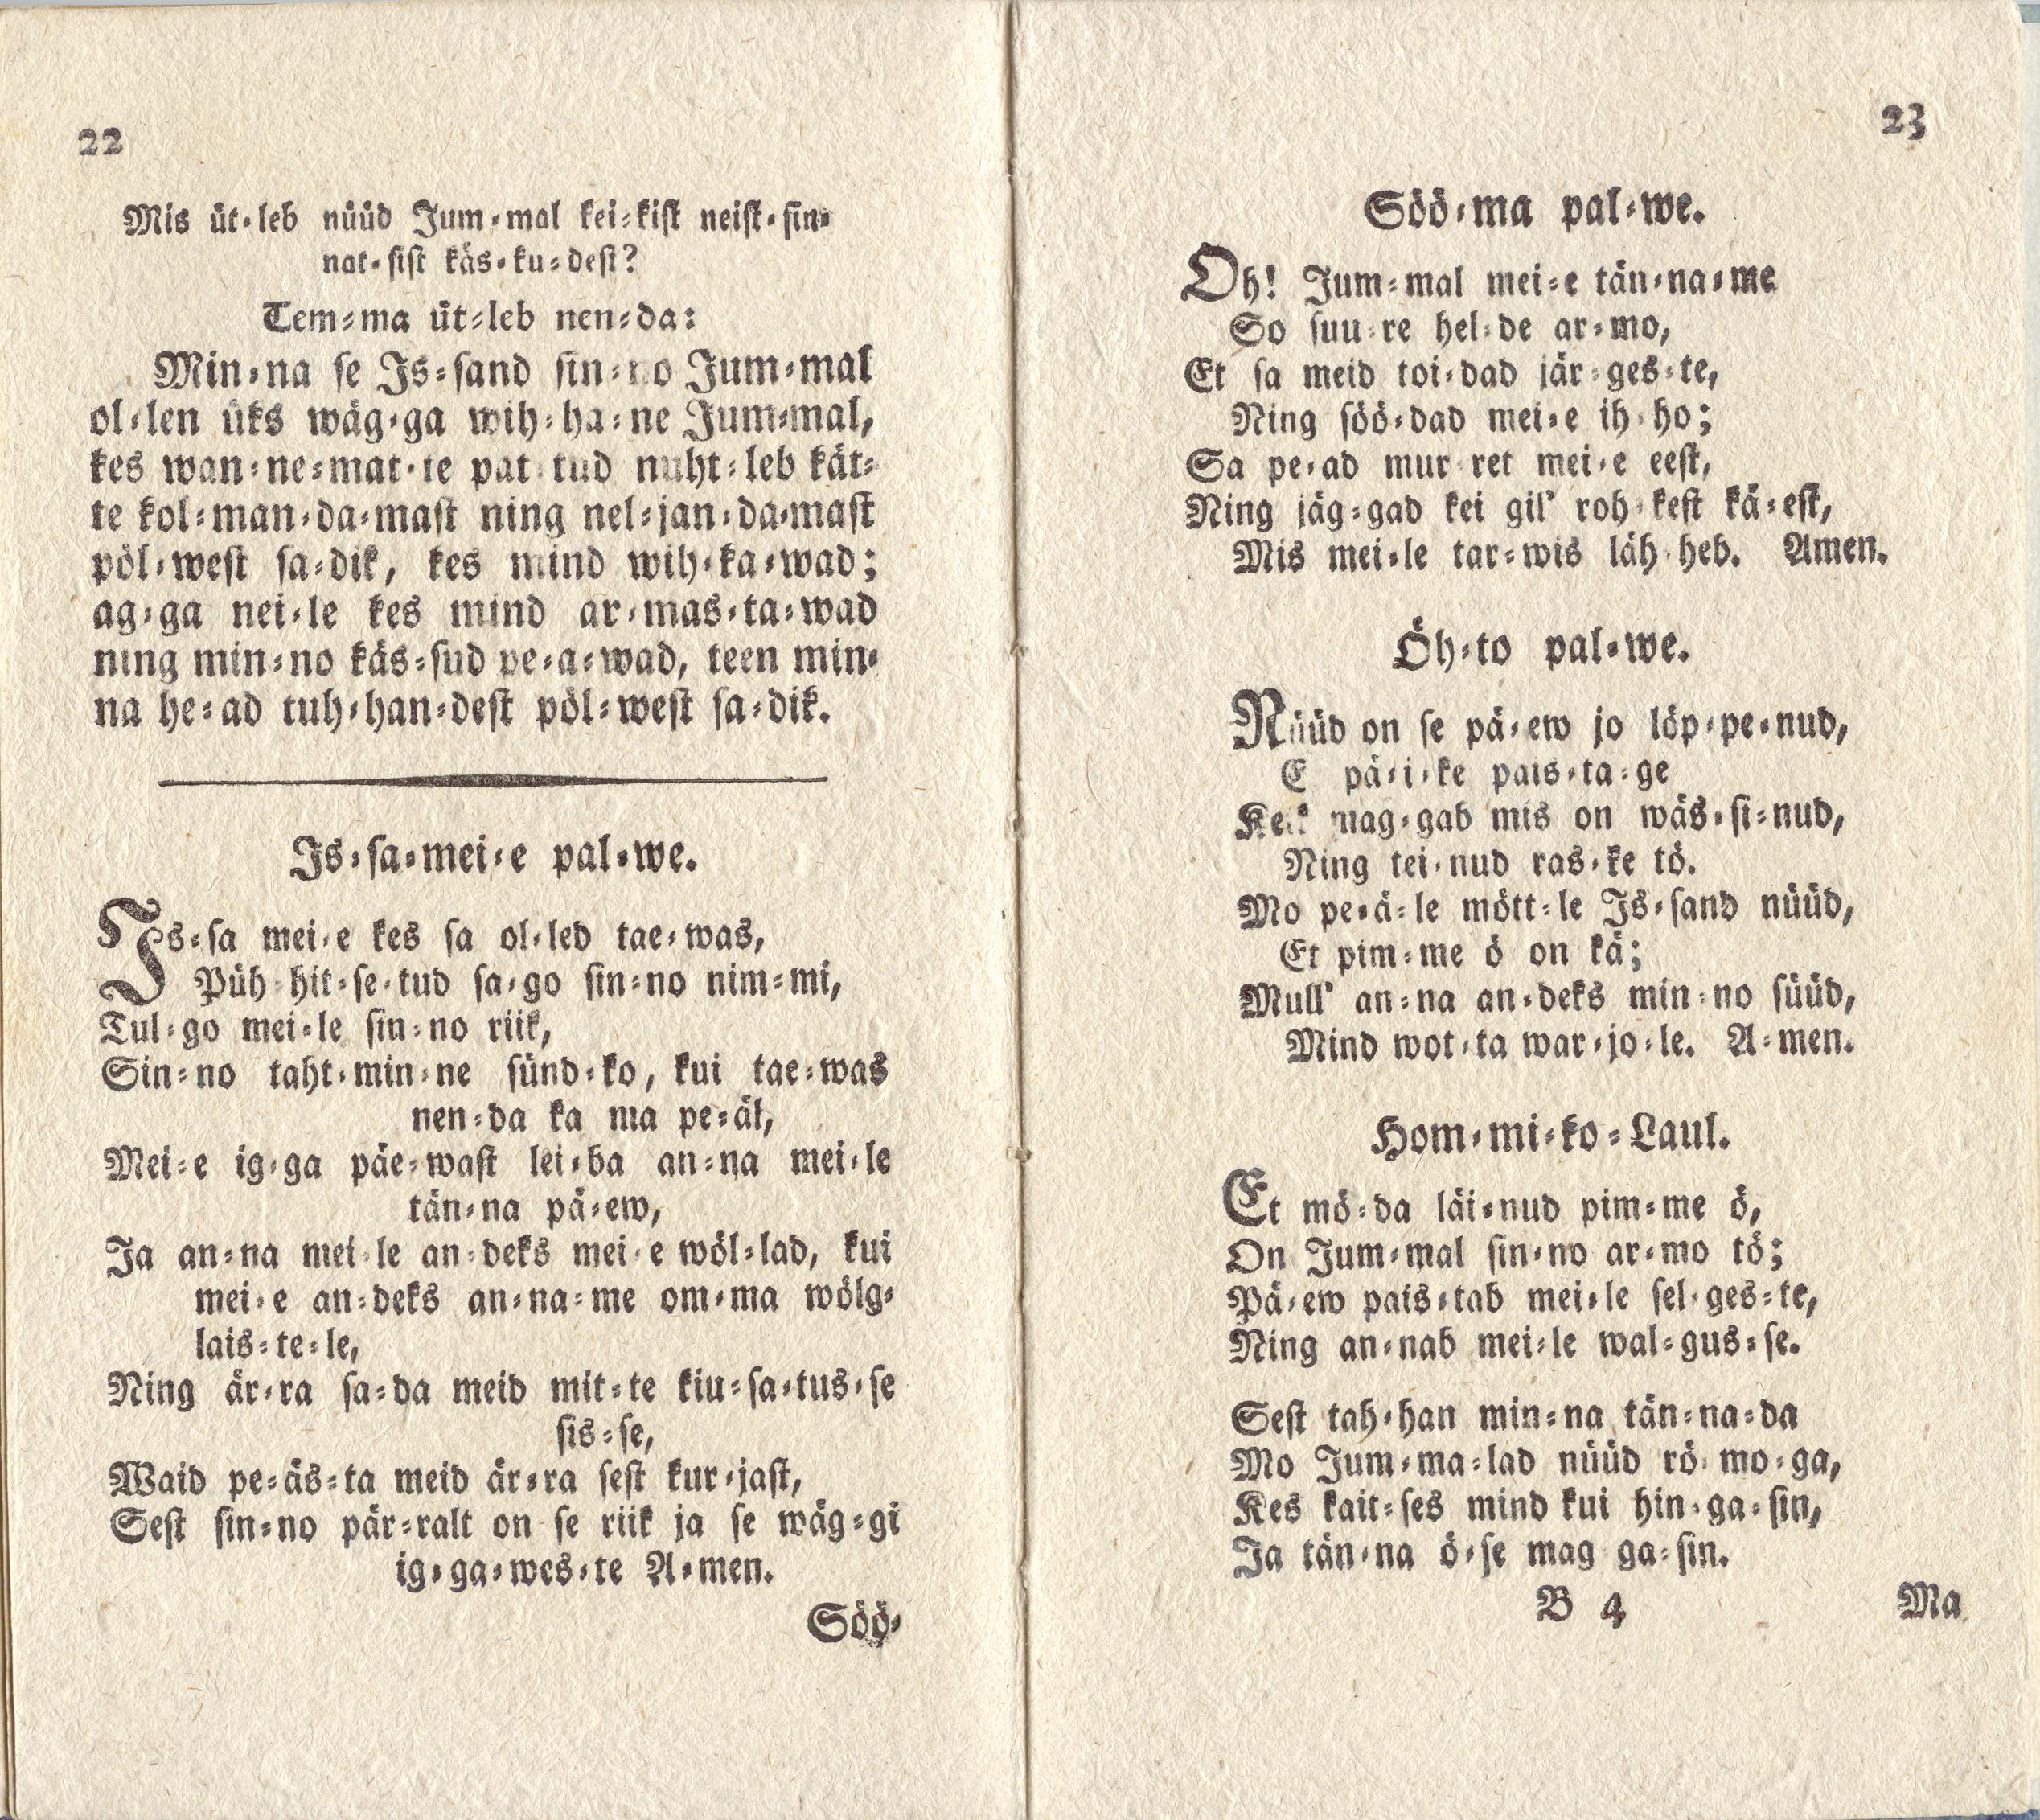 ABD ehk Luggemise-Ramat Lastele (1795) | 13. (22-23) Основной текст